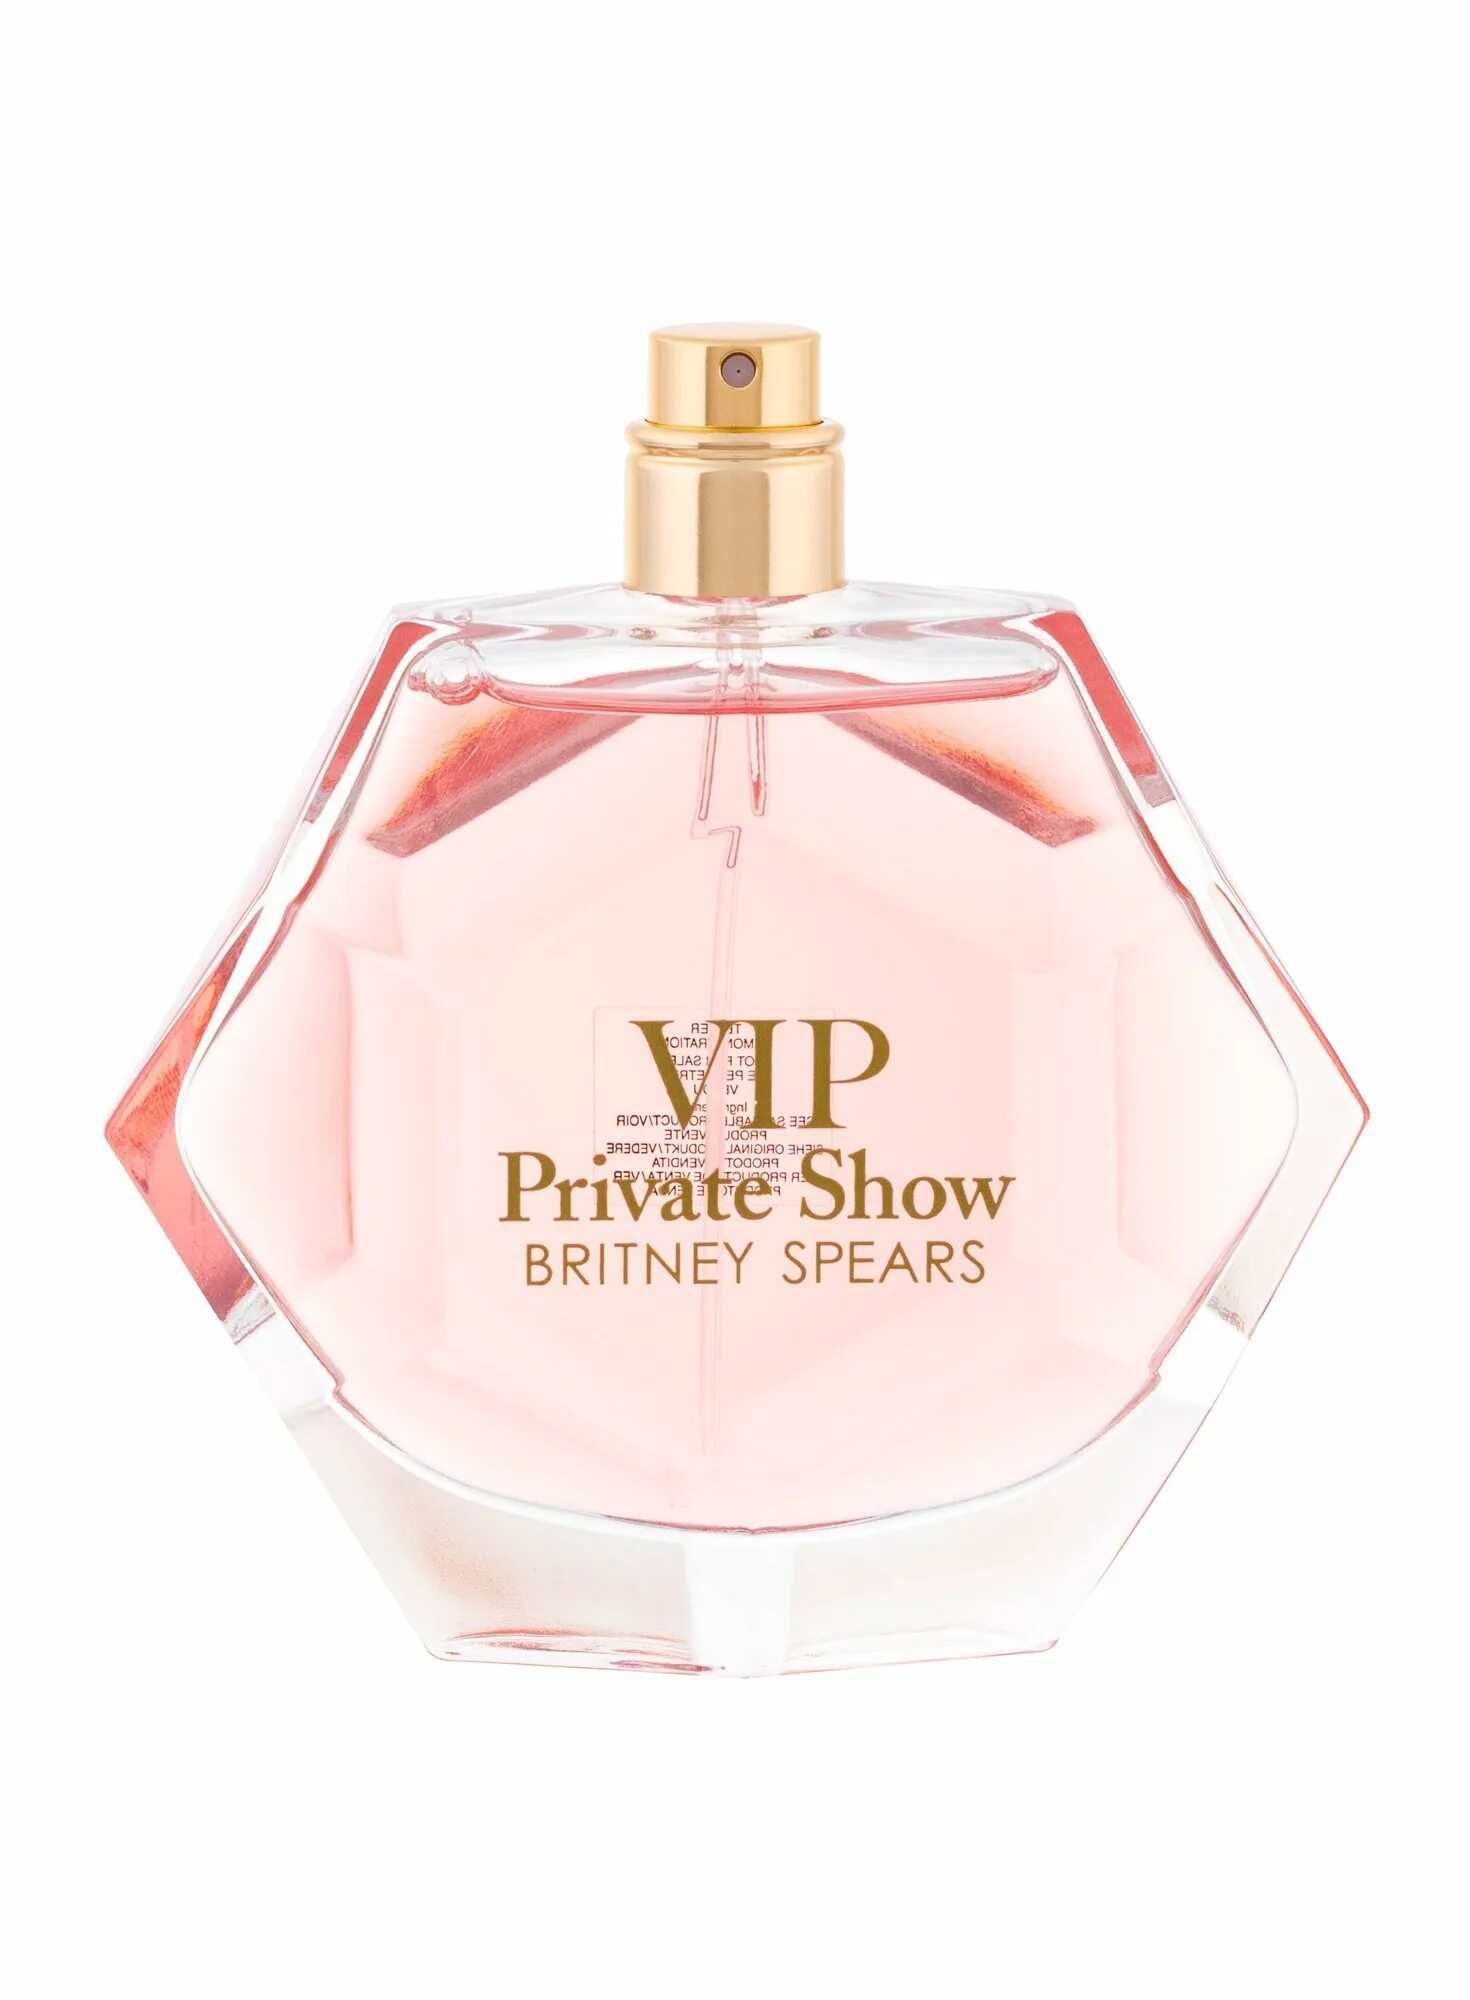 Show show духи. Духи Parfum show Britney. VIP духи для женщин. Духи вип персона 2012 женские. Купить парфюмерию от Britney Spears VIP private show.